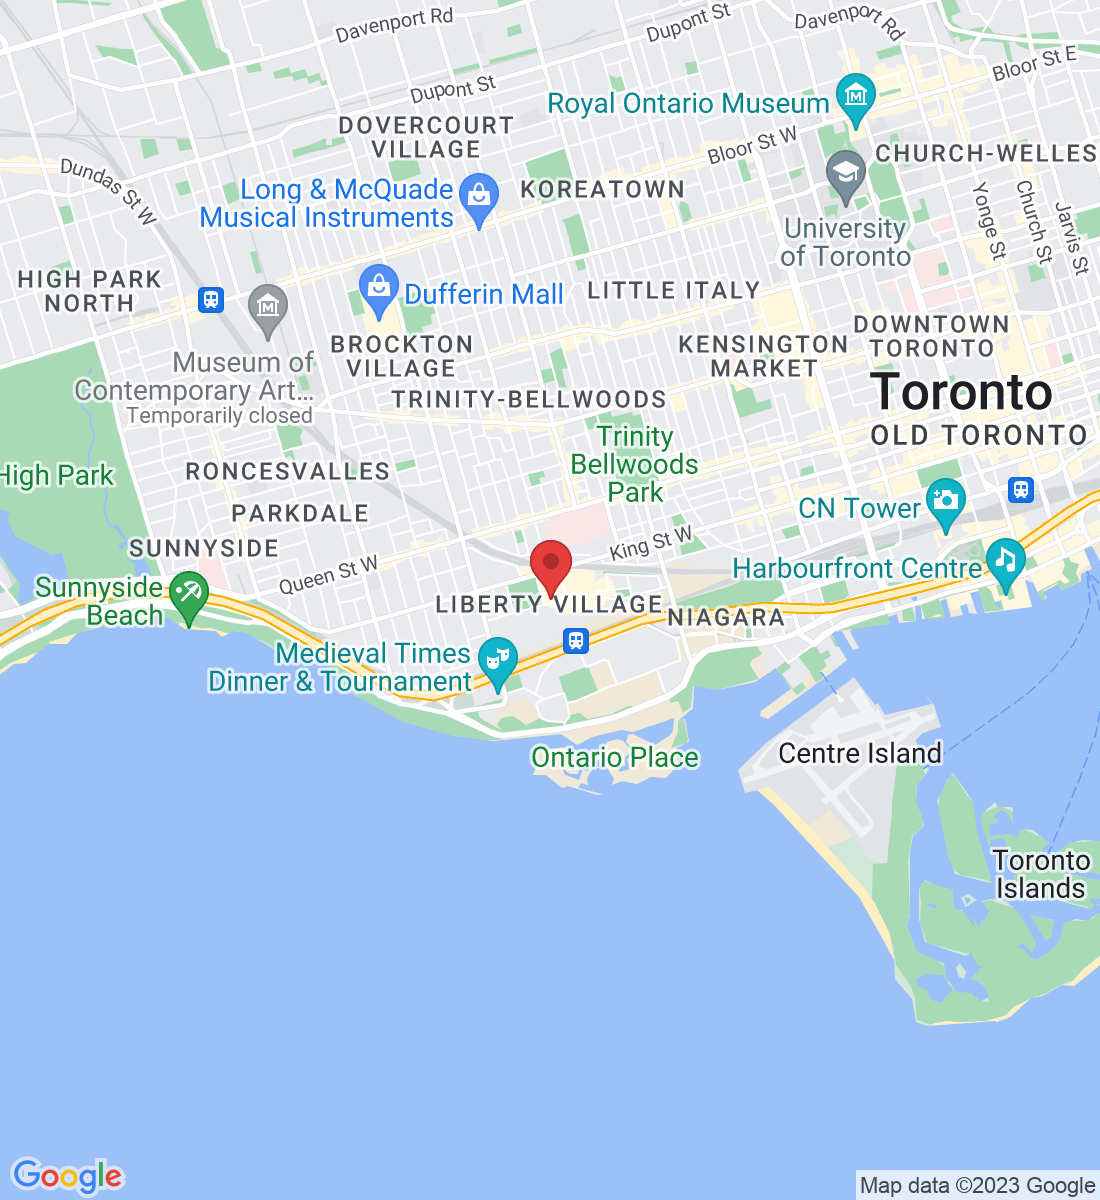 60 Atlantic Ave suite 200, Toronto, ON M6K 1X9, Canada